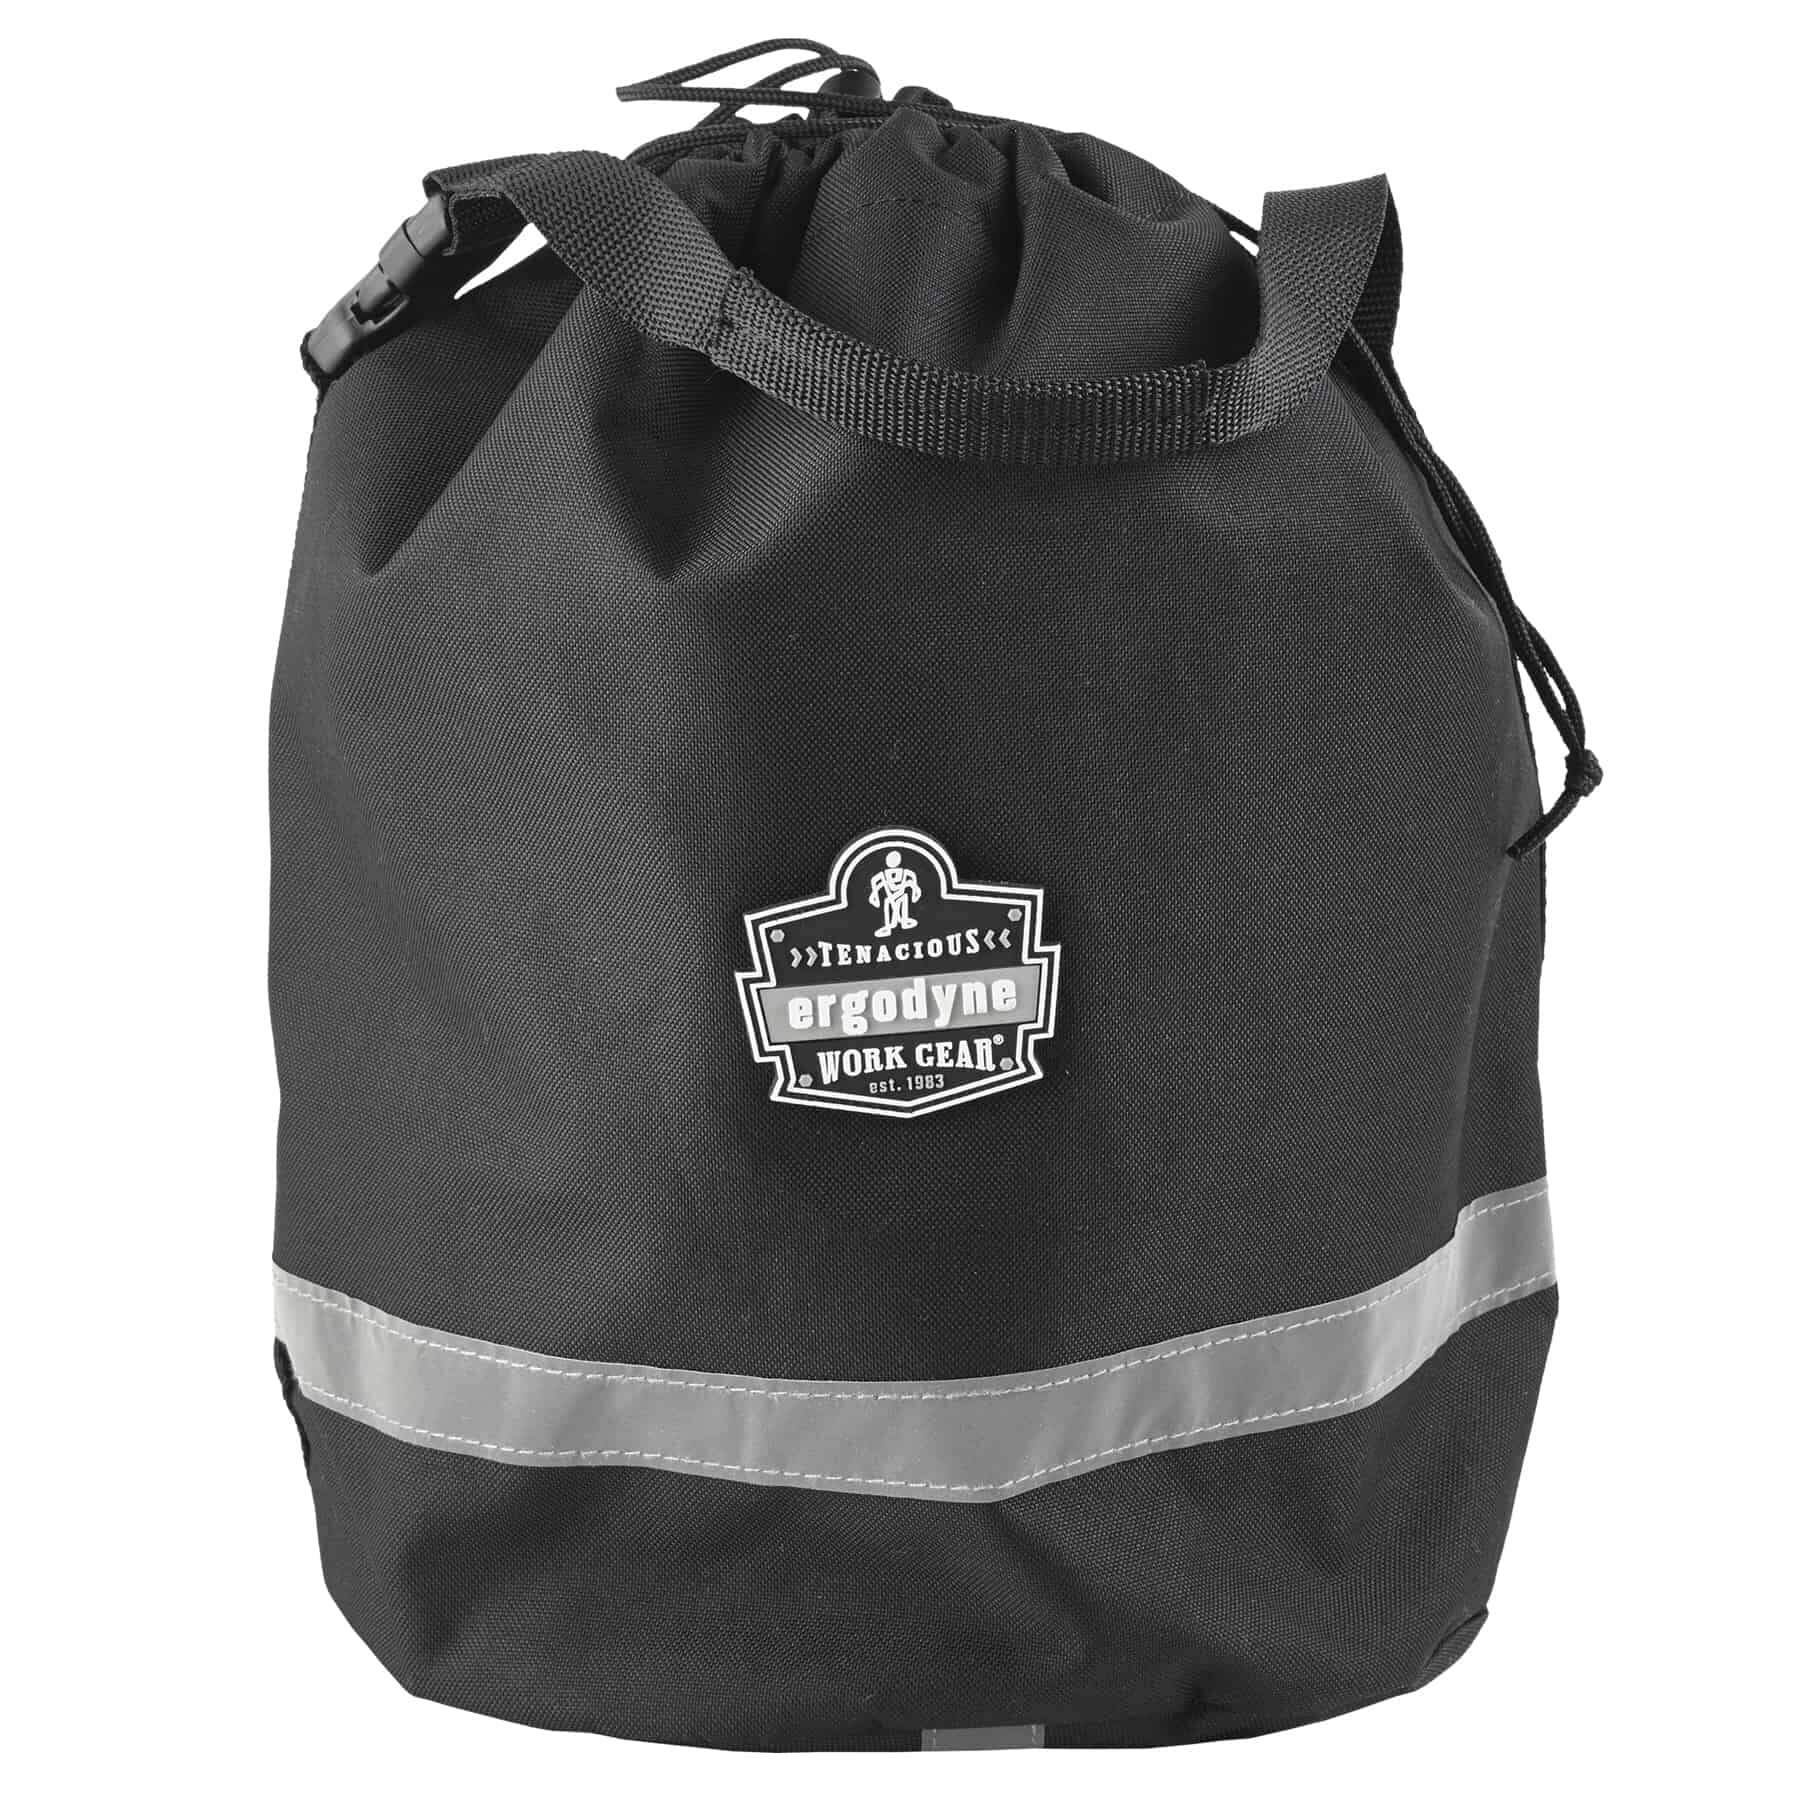 Fall Protection Bag - Bags/Totes